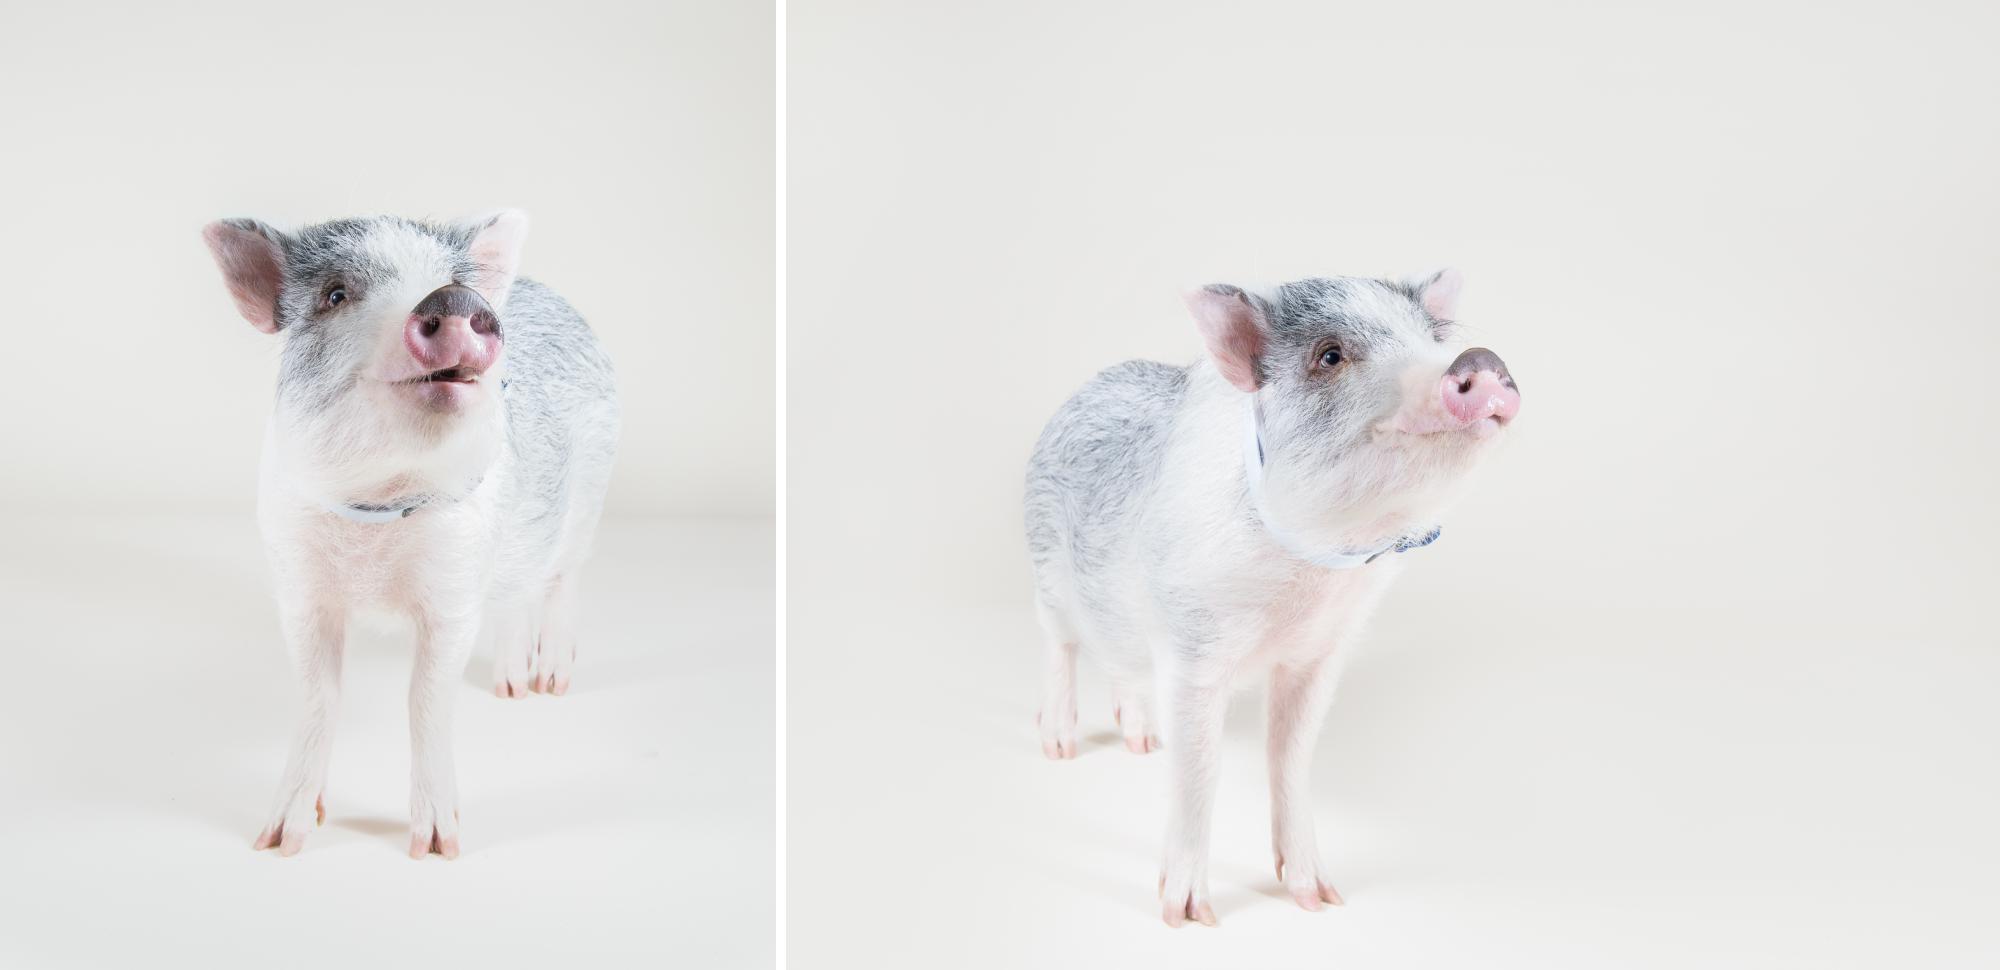 Mini pig smiling in a photo studio